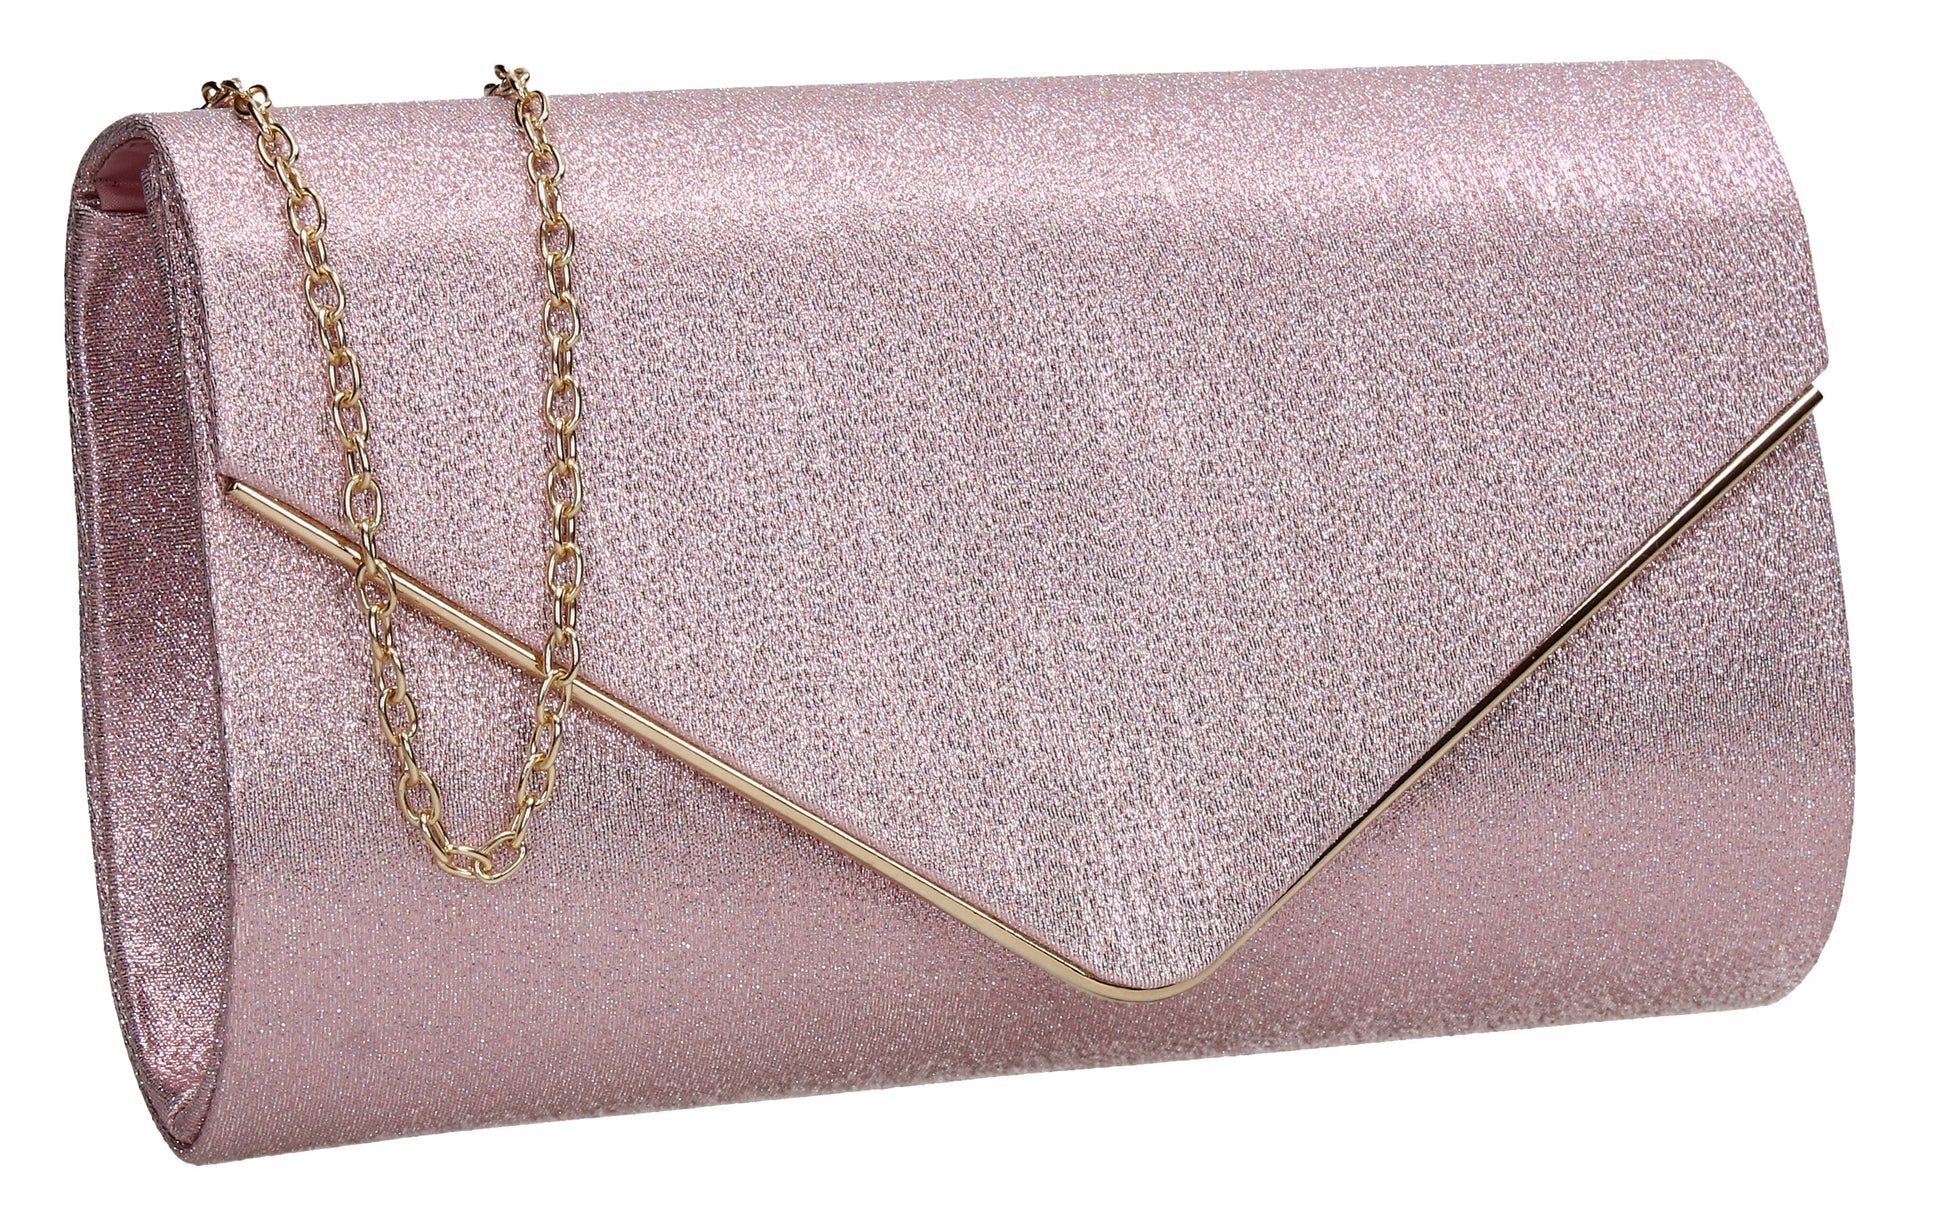 SWANKYSWANS Maya Clutch Bag Pink Cute Cheap Clutch Bag For Weddings School and Work